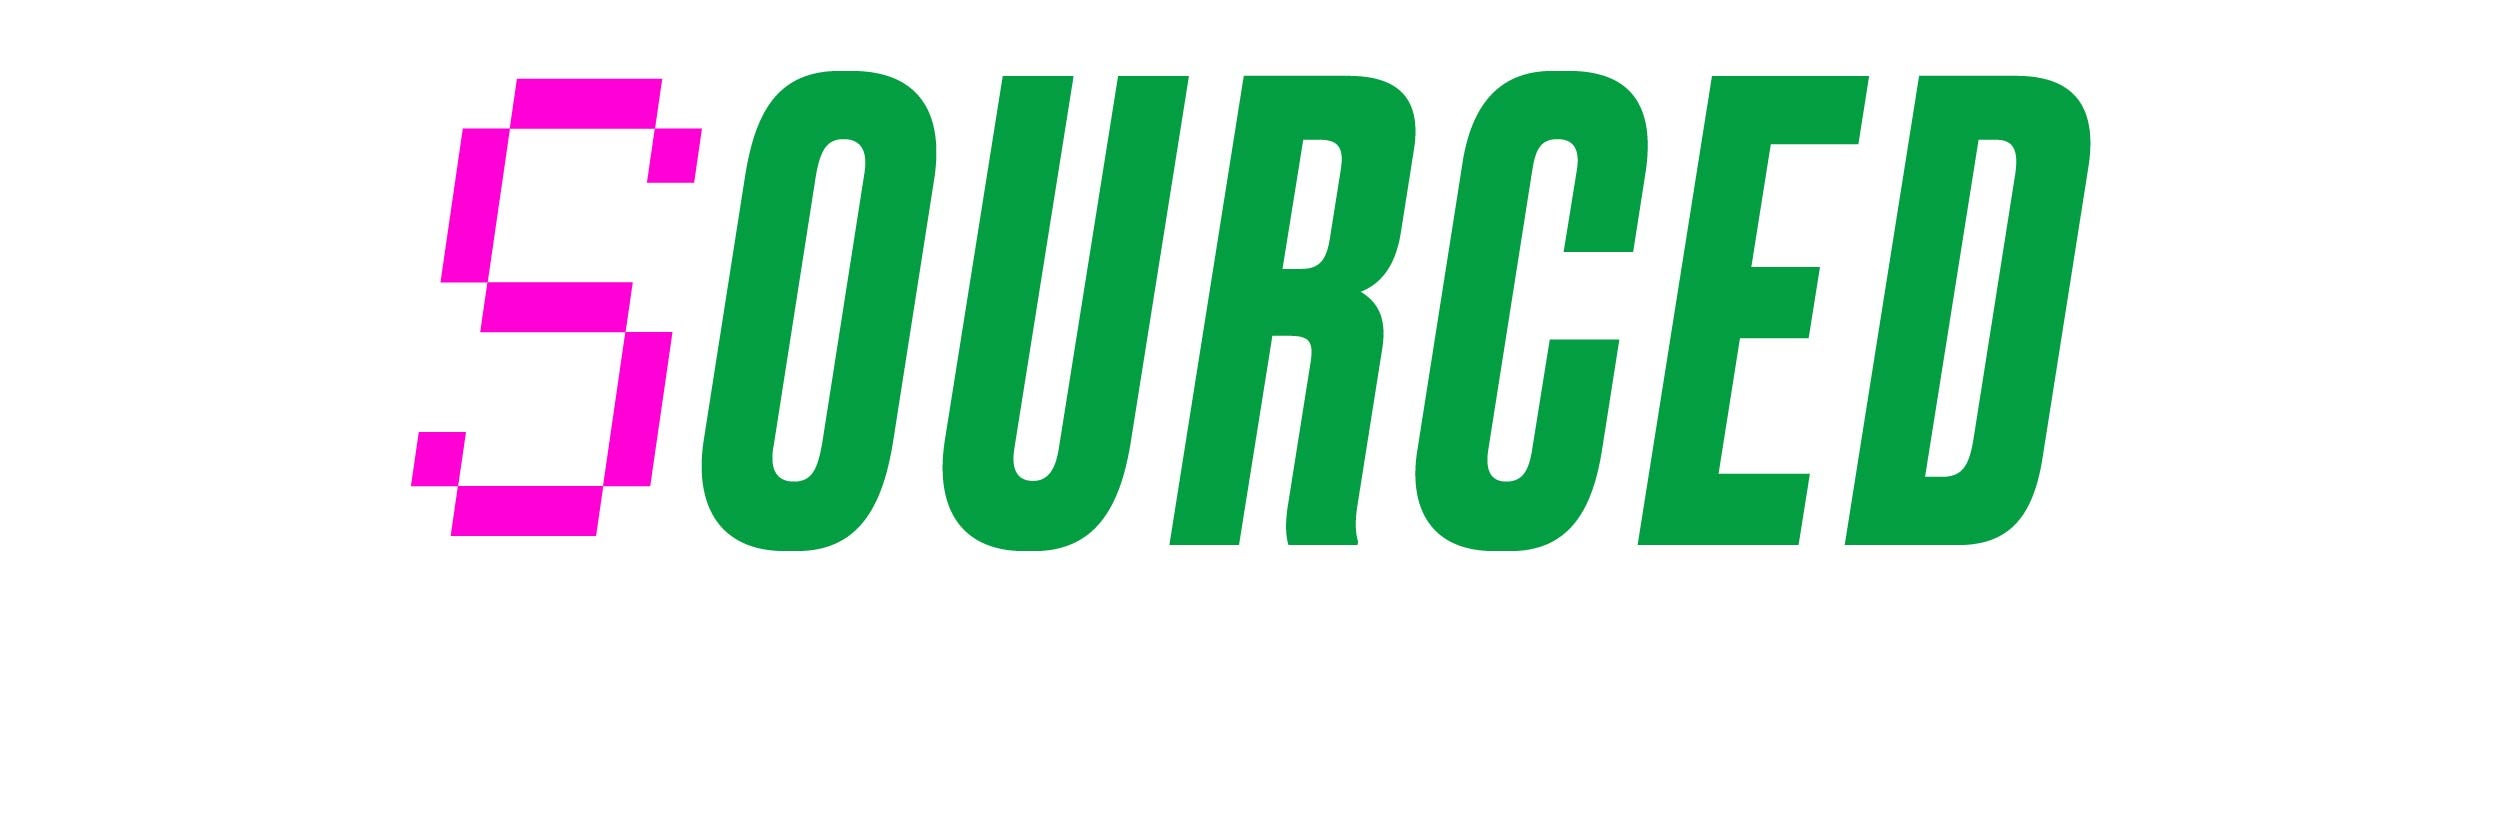 Sourced logo